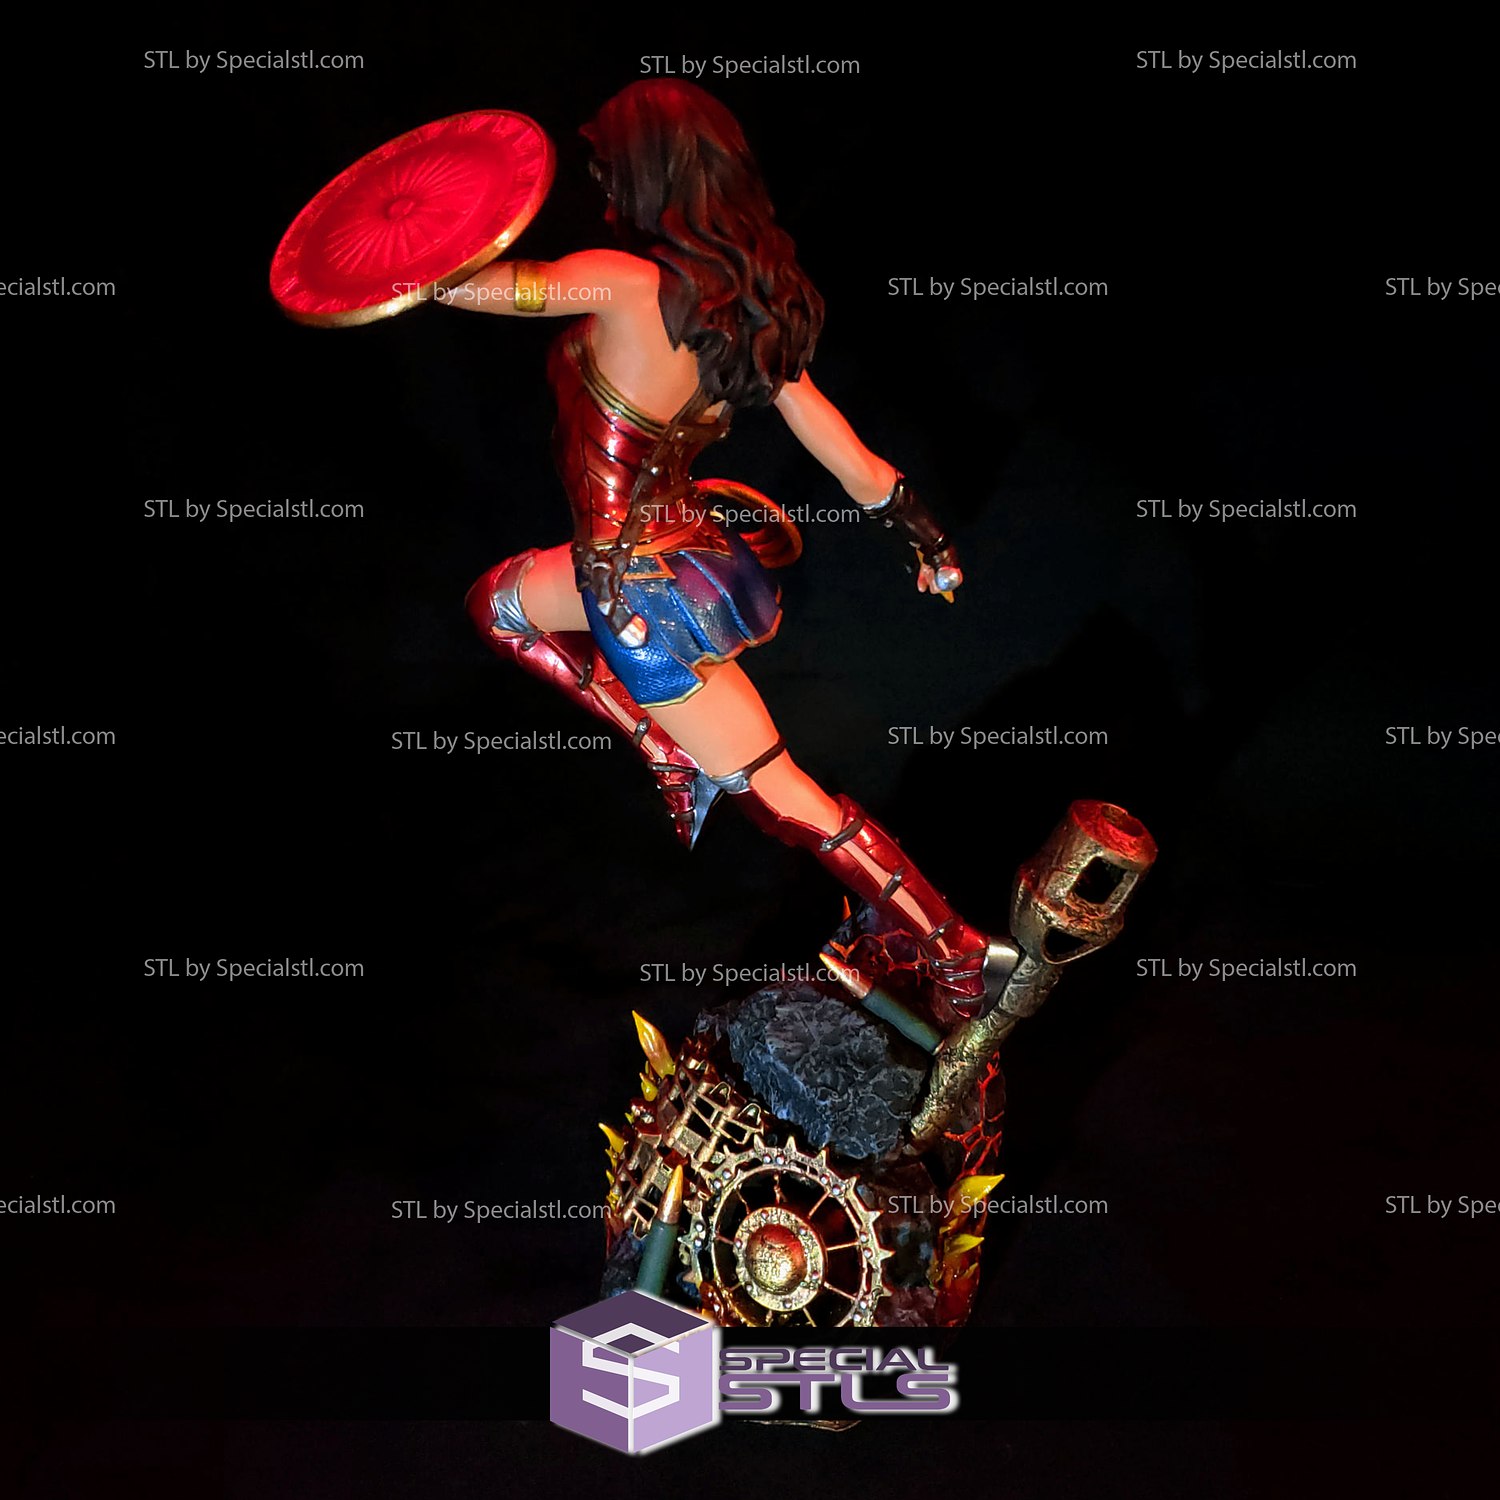 Warrior Wonder Women V2 from DC